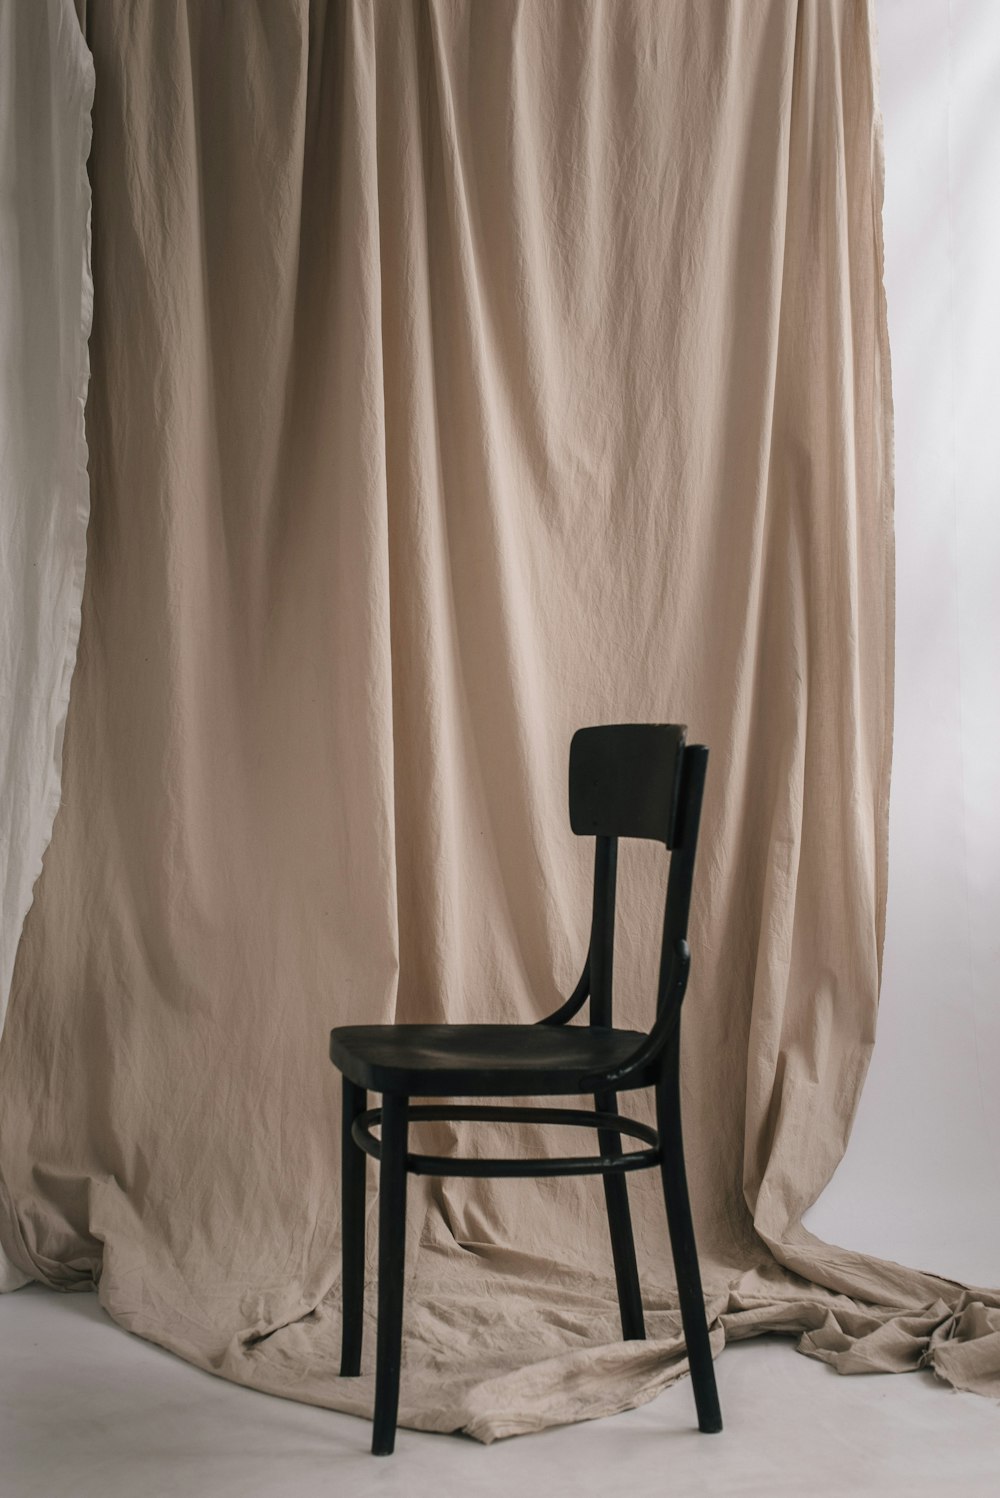 black wooden chair beside white curtain